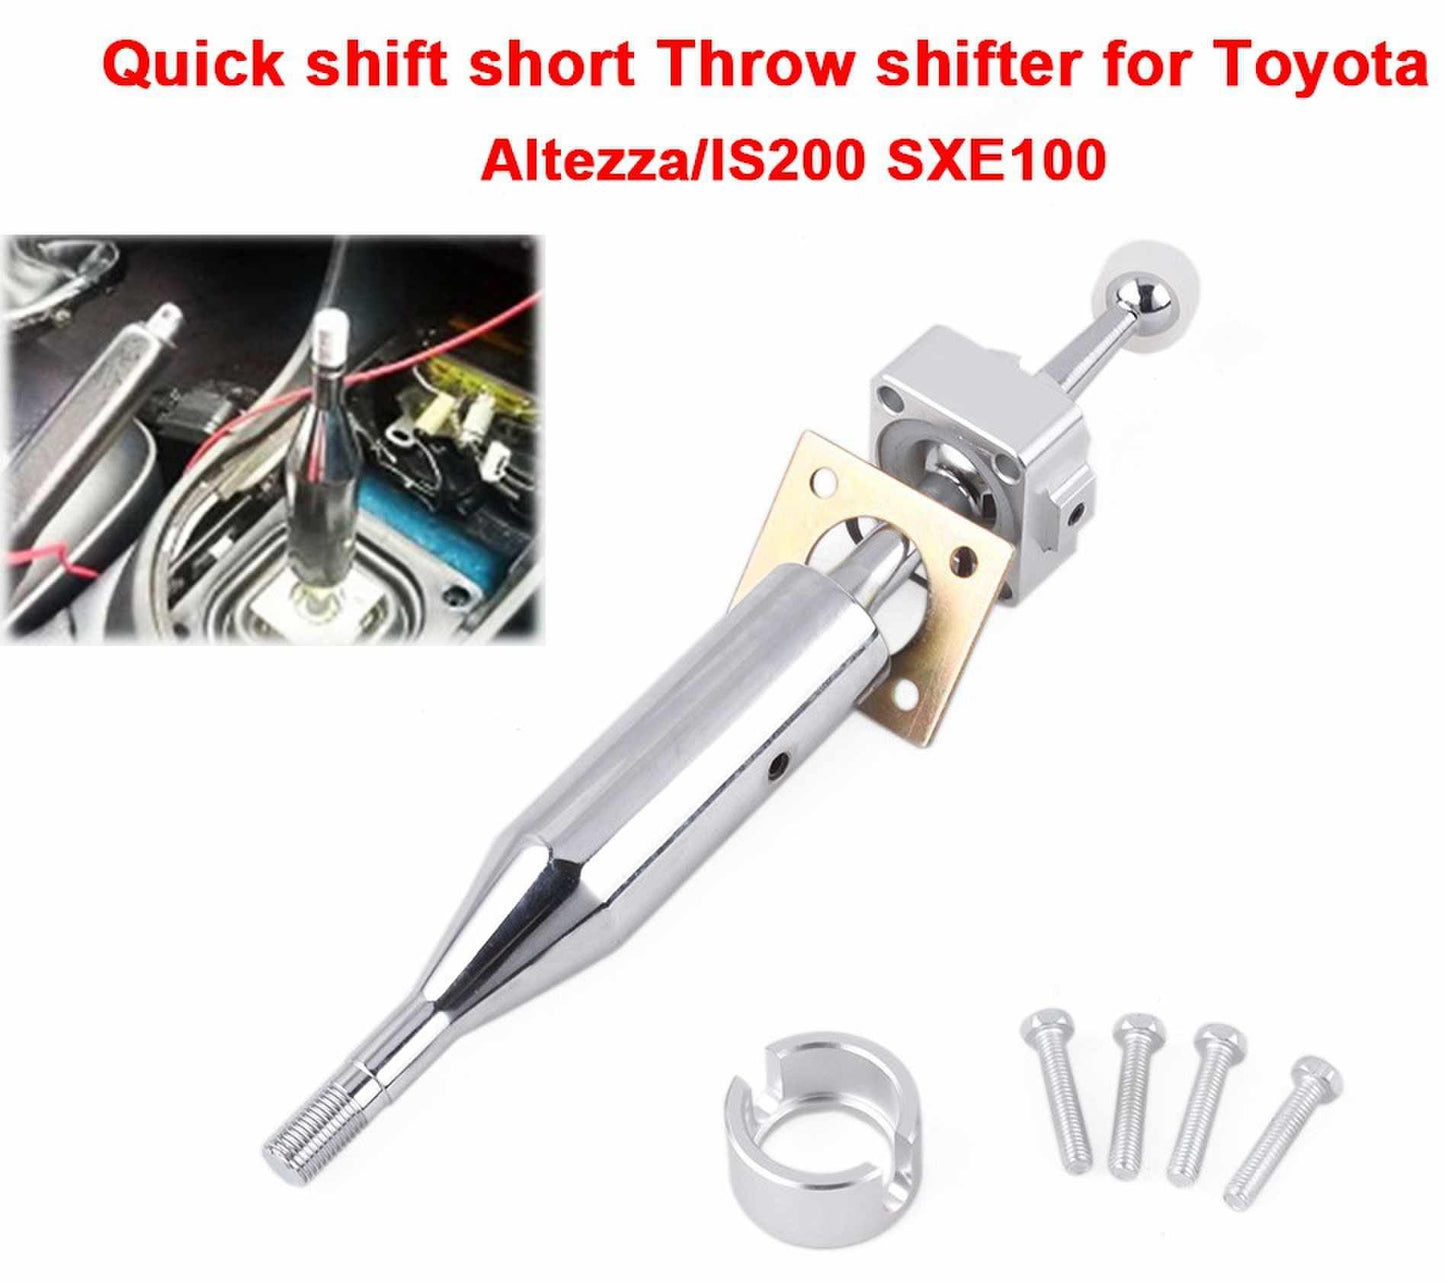 RASTP Aluminium Racing Manual Quick Shift Short Throw Shifter for Toyota Altezza/IS200 SXE100 - RASTP